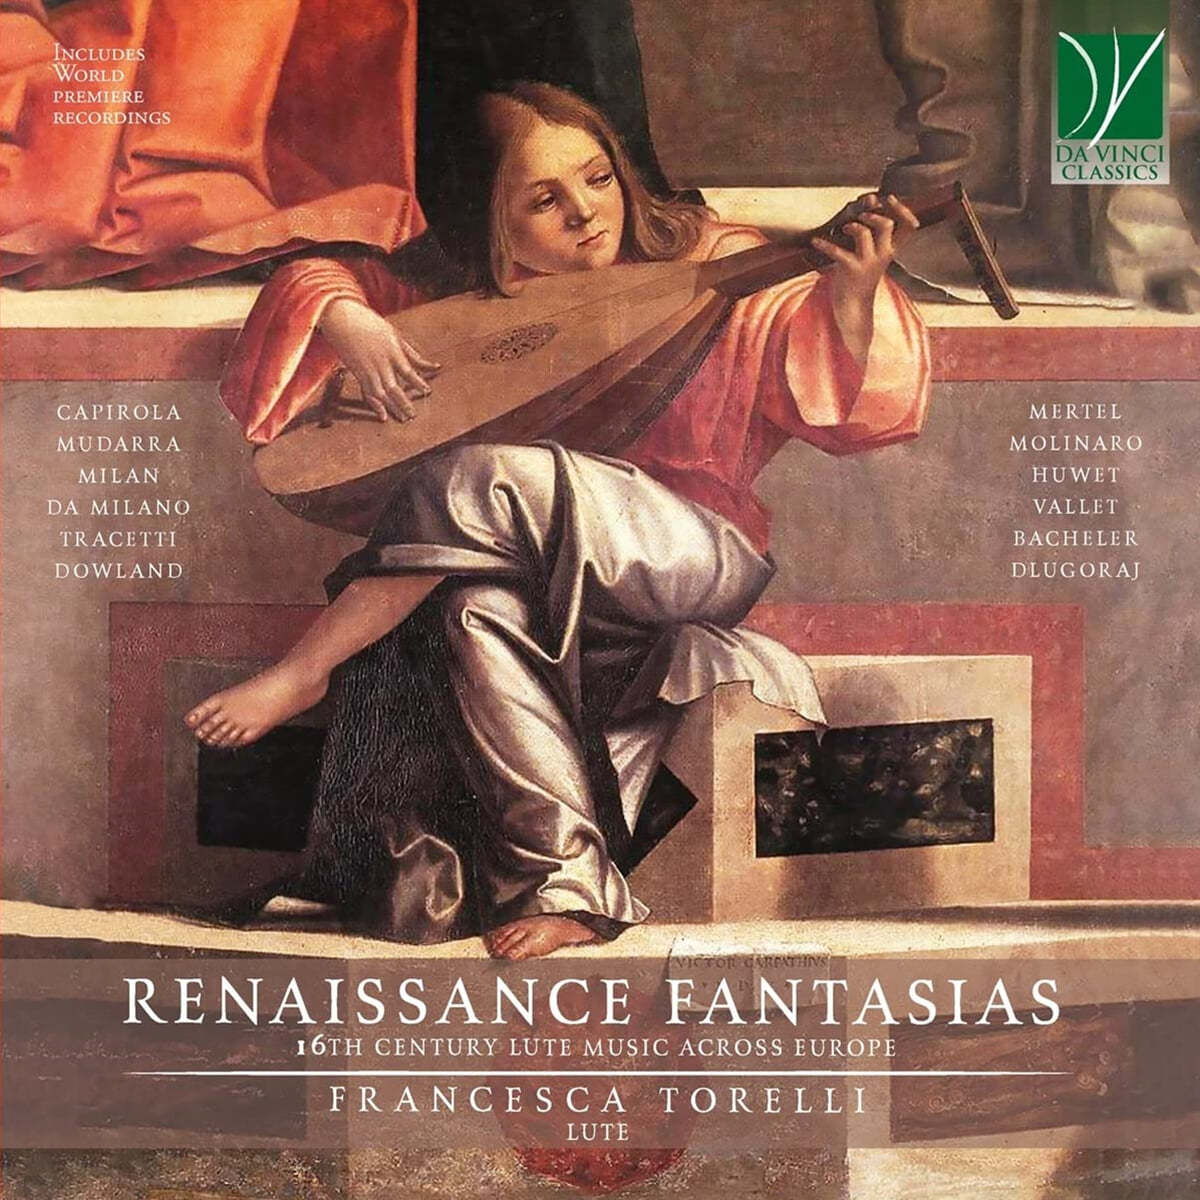 Francesca Torelli 르네상스 환상곡 - 16세기 류트 음악 (Renaissance Fantasias - 16th Century Lute Music across Europe)